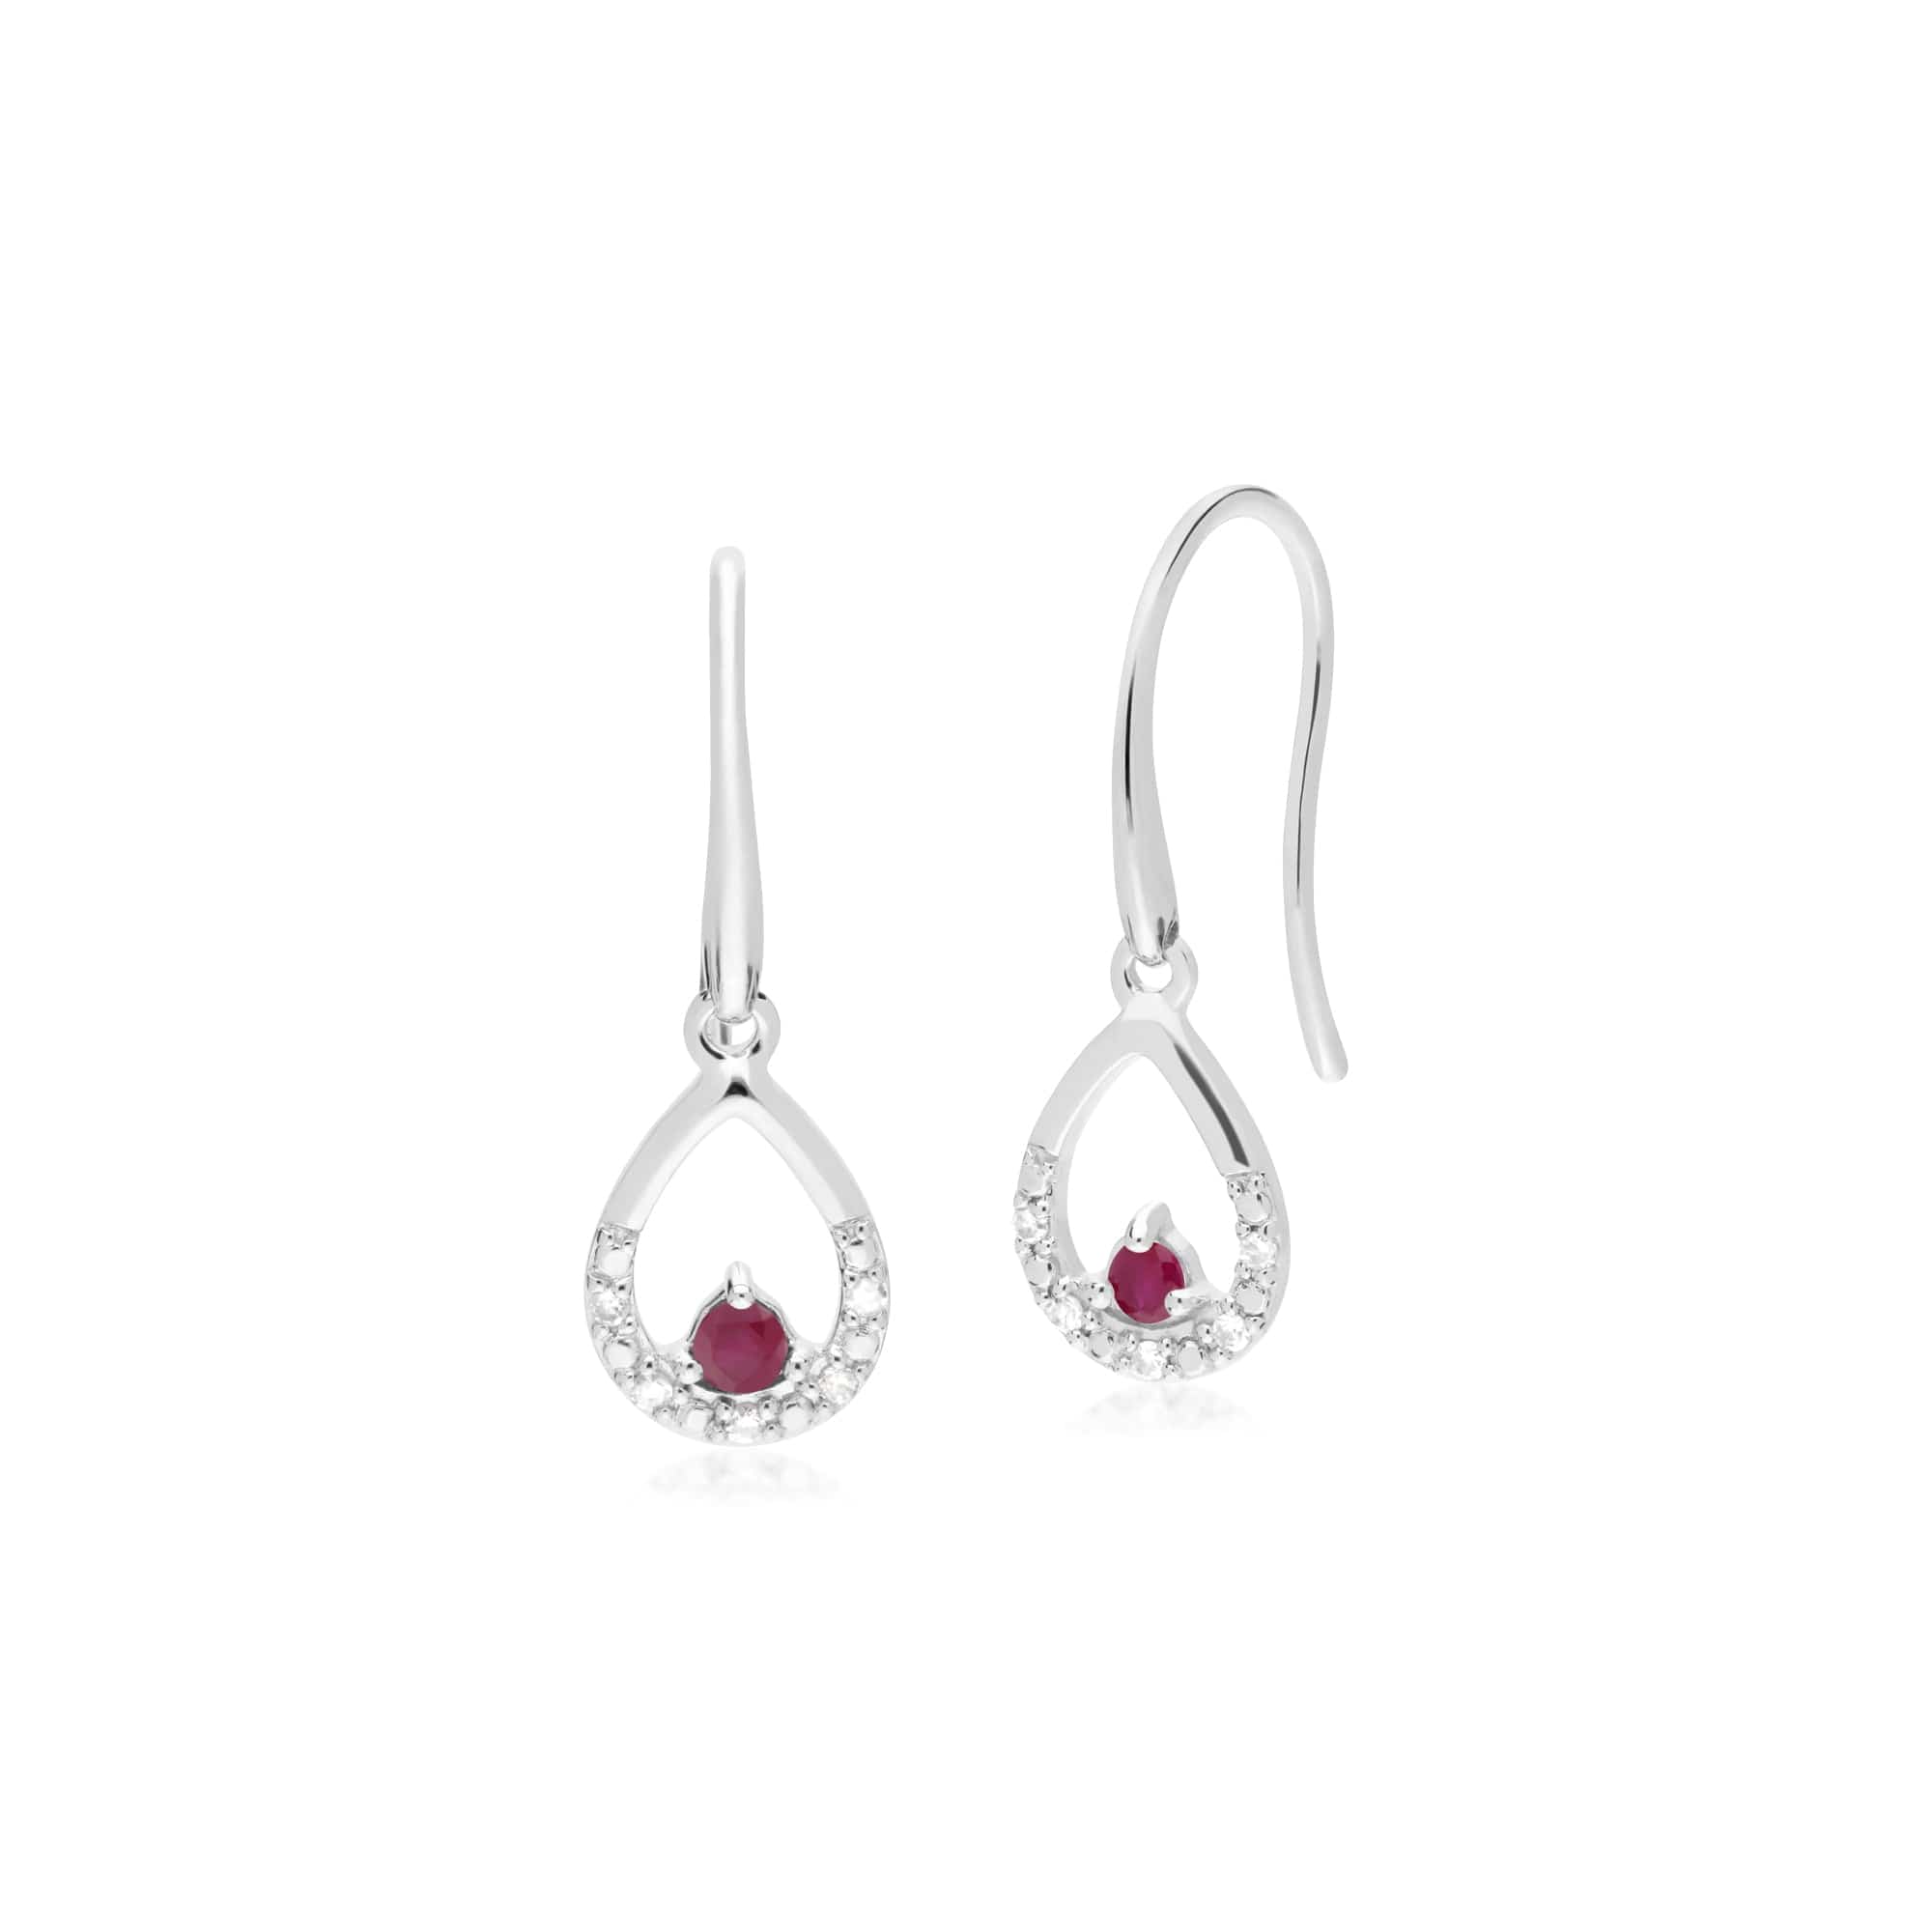 162E0259019-162P0220019 Classic Round Ruby & Diamond Tear Drop Earrings & Pendant Set in 9ct White Gold 2